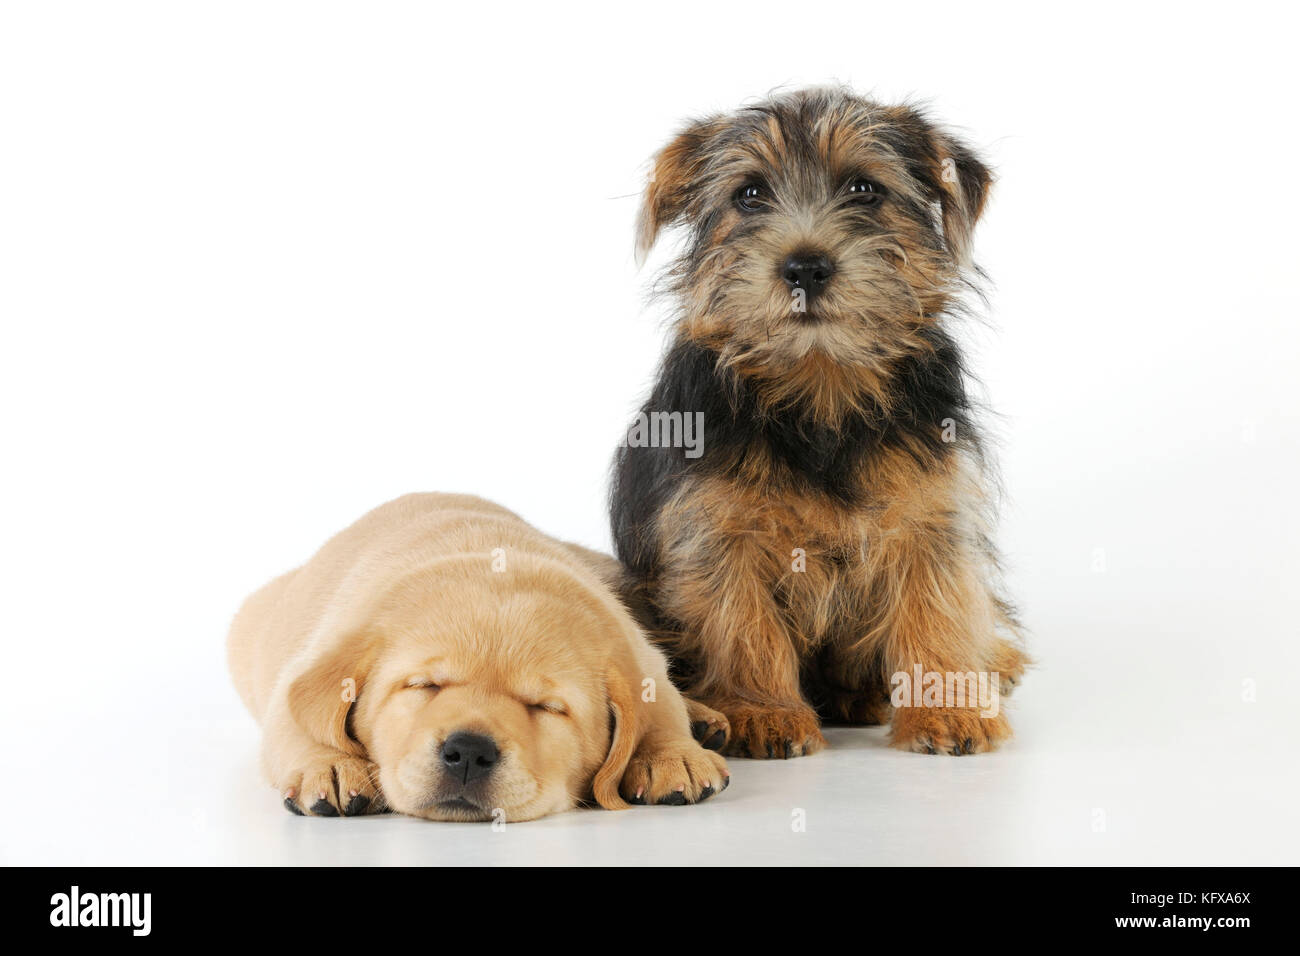 DOG. Yellow labrador puppy lying next to norfolk terrier puppy sitting Stock Photo